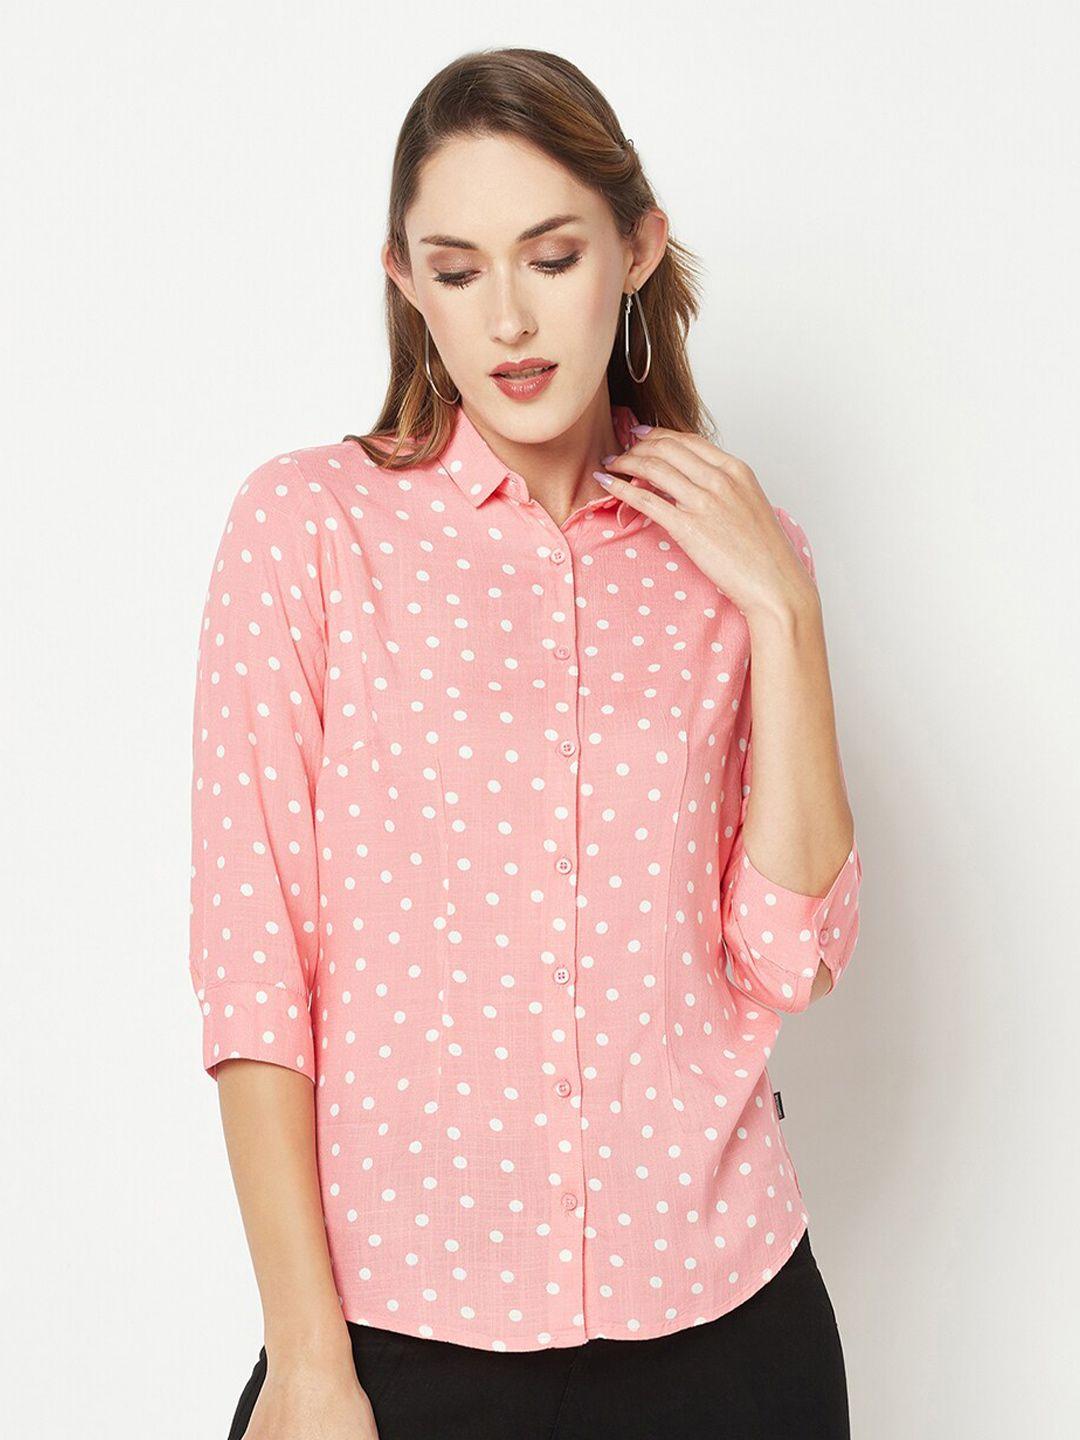 crimsoune club comfort polka dots printed casual shirt